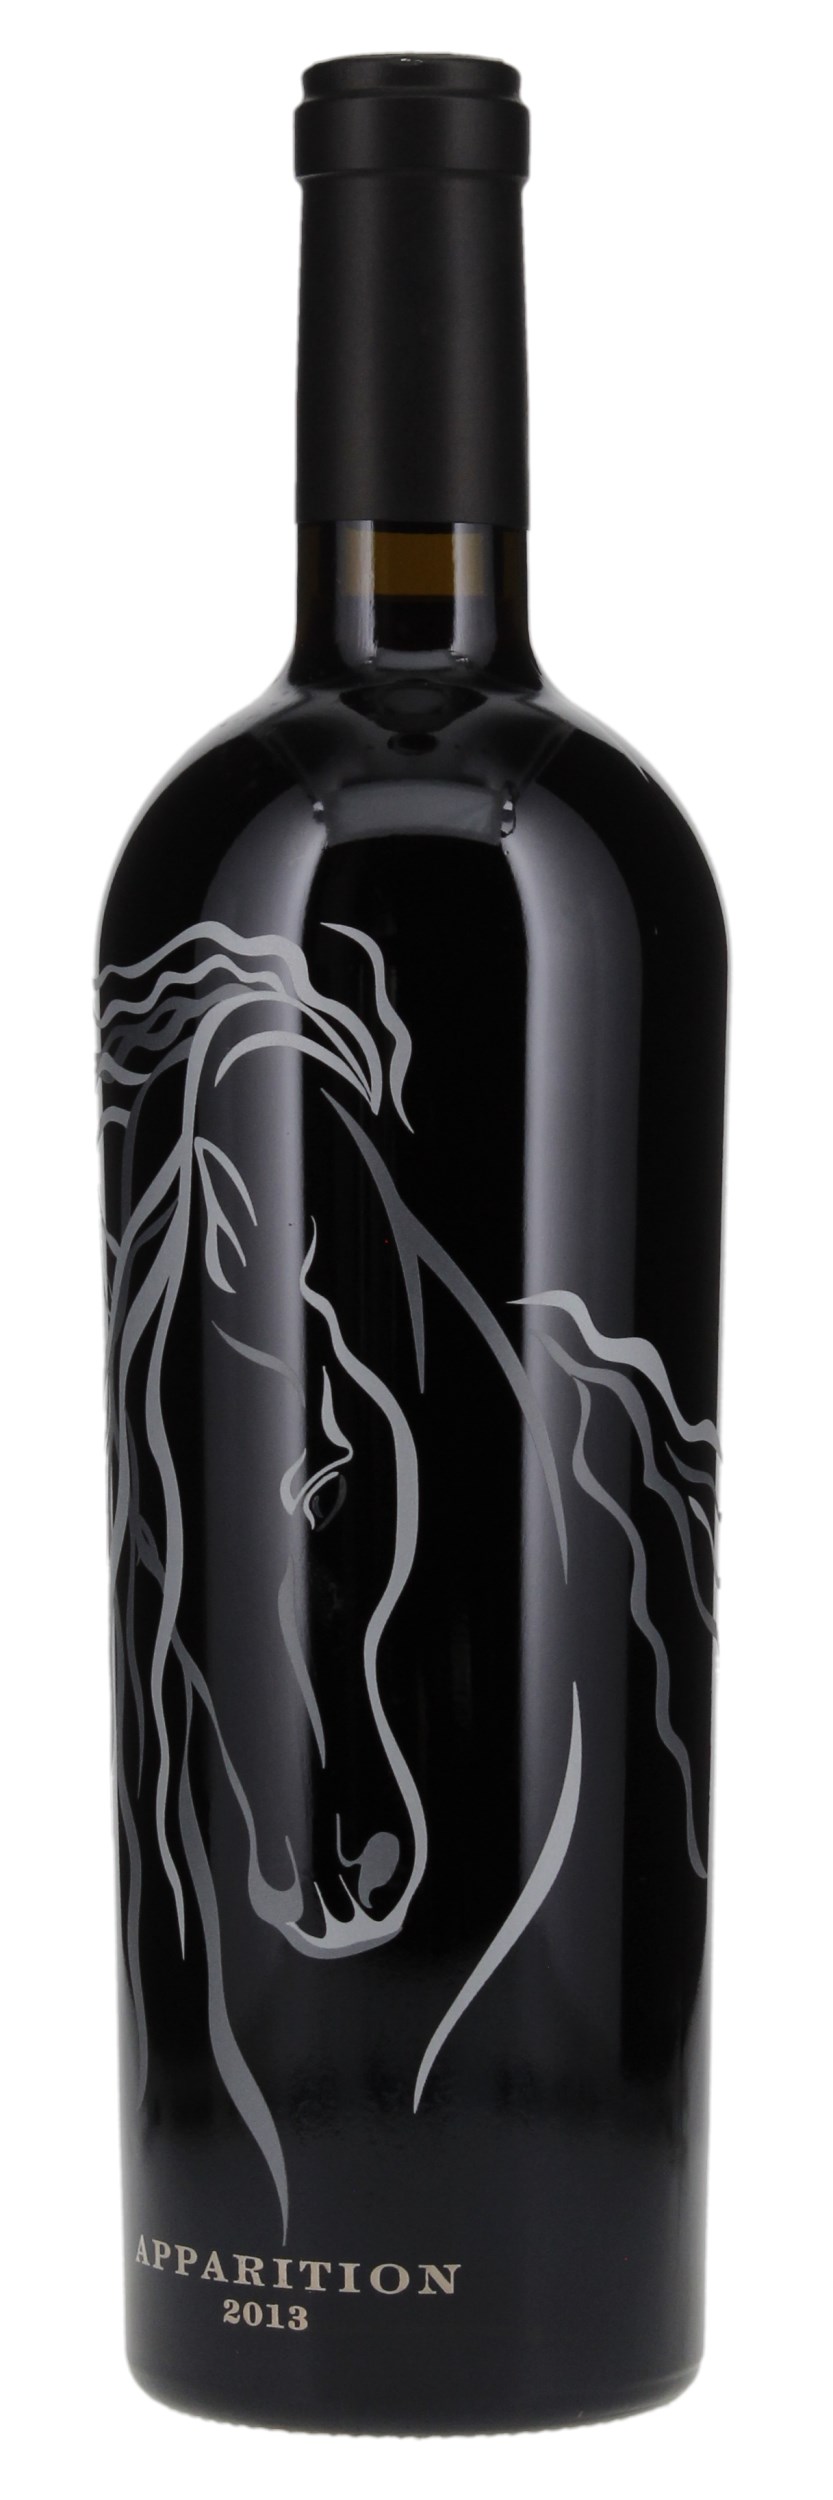 2013 Ghost Horse Vineyard Apparition Cabernet Sauvignon, 750ml